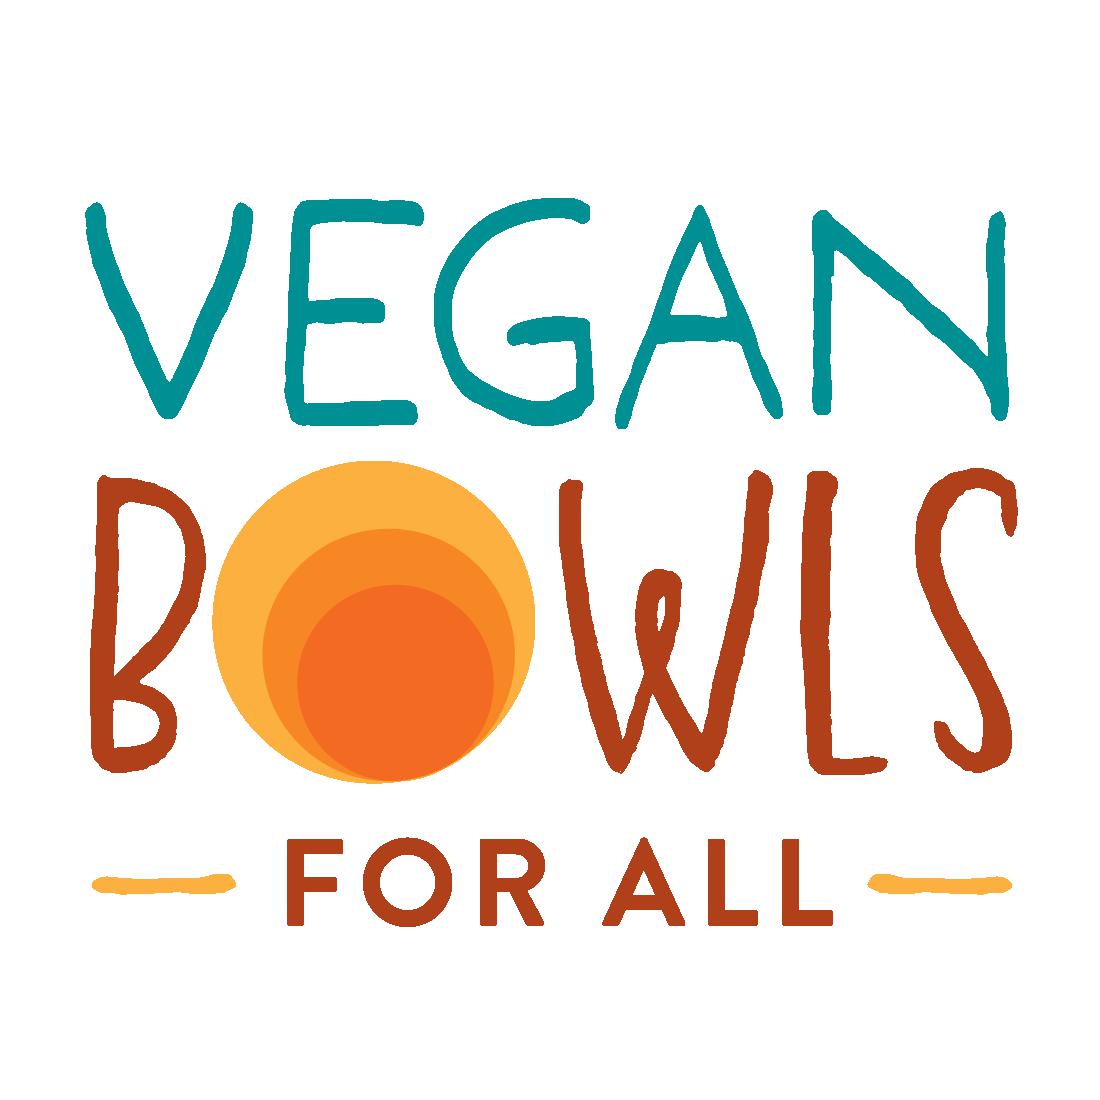 Vegan Bowls For All - Santa Monica Santa Monica